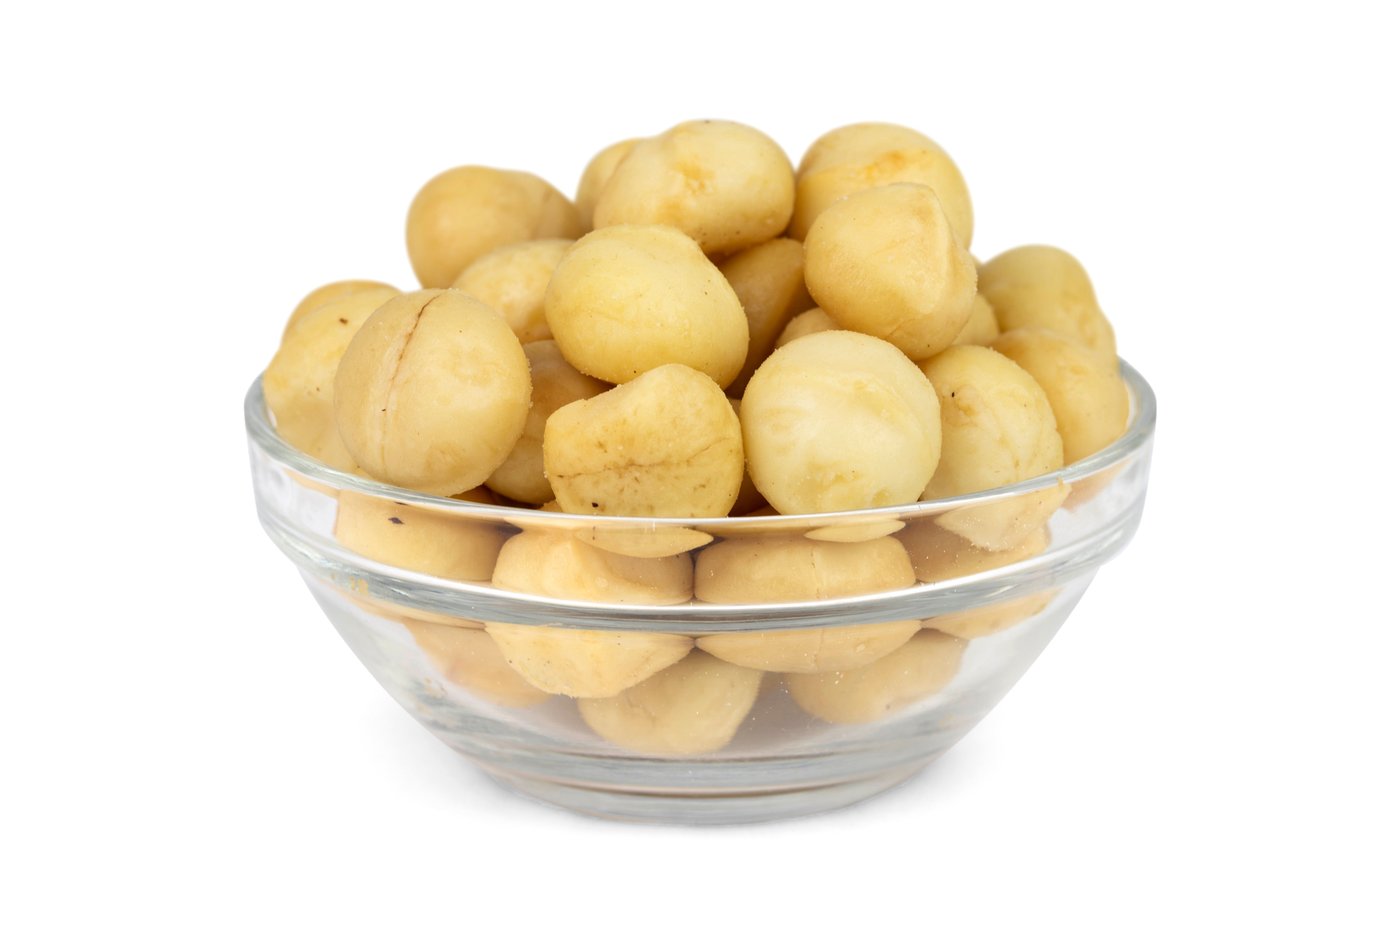 Roasted Macadamia Nuts (Unsalted) photo